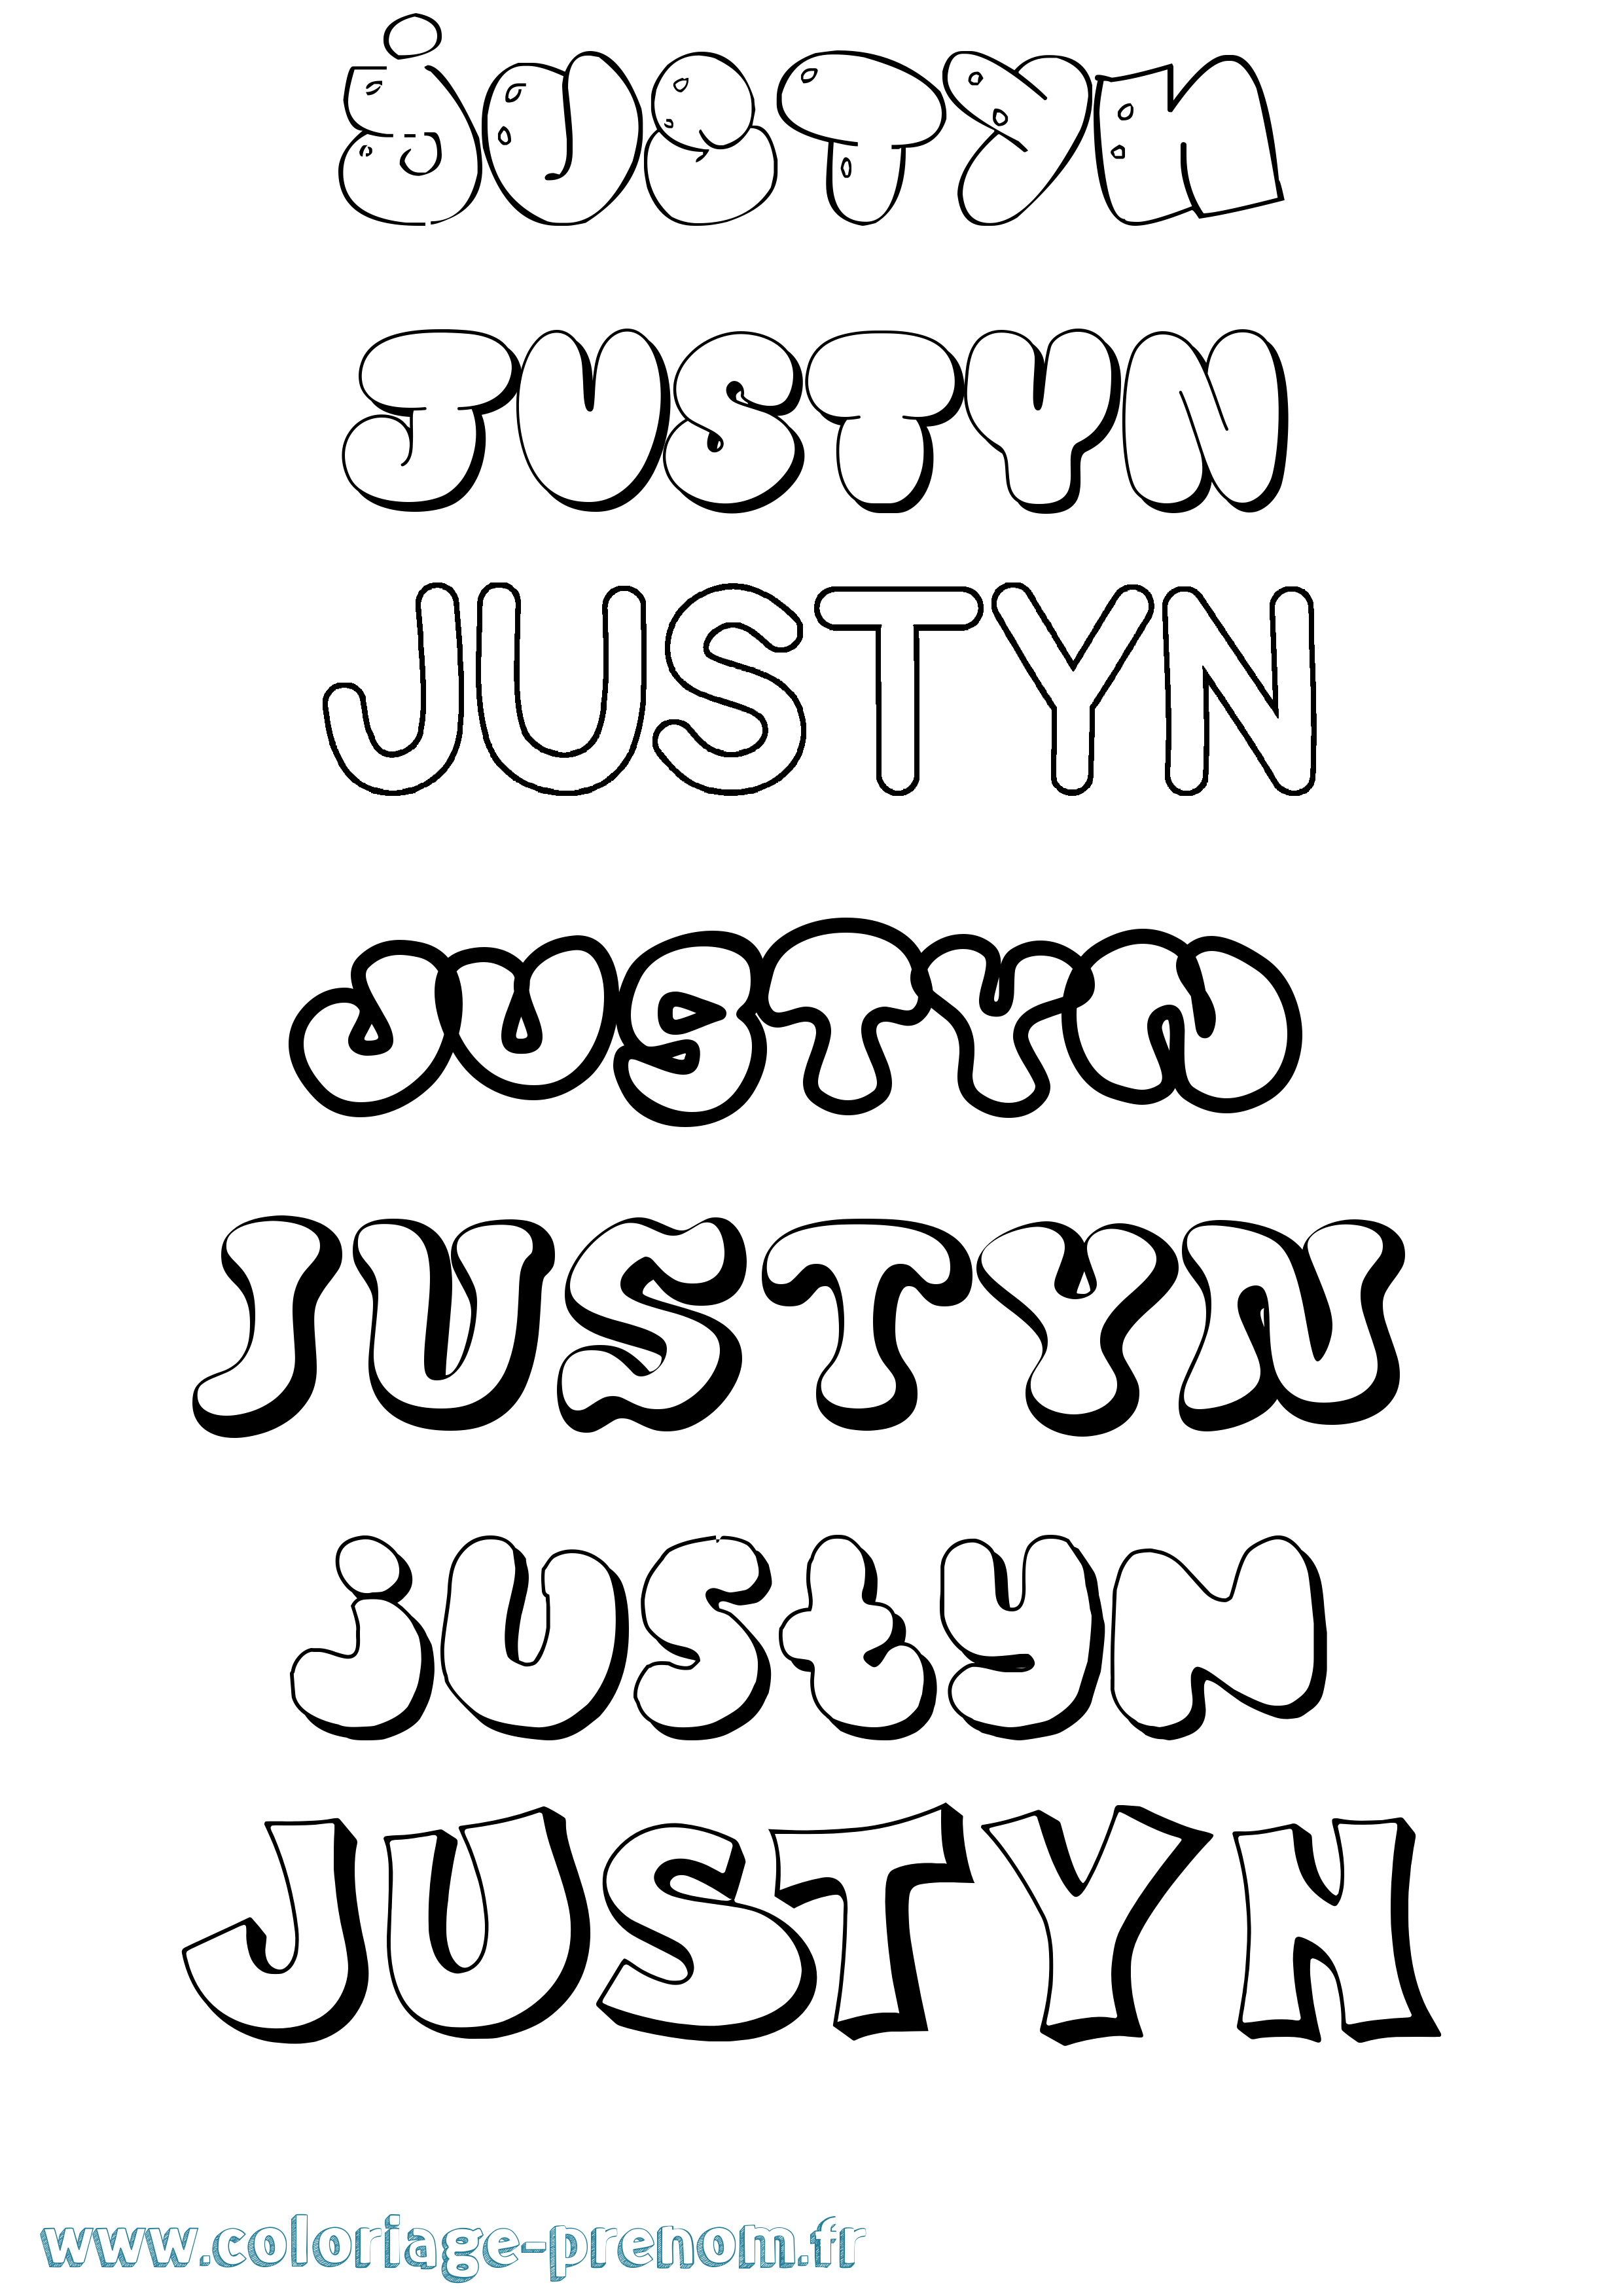 Coloriage prénom Justyn Bubble